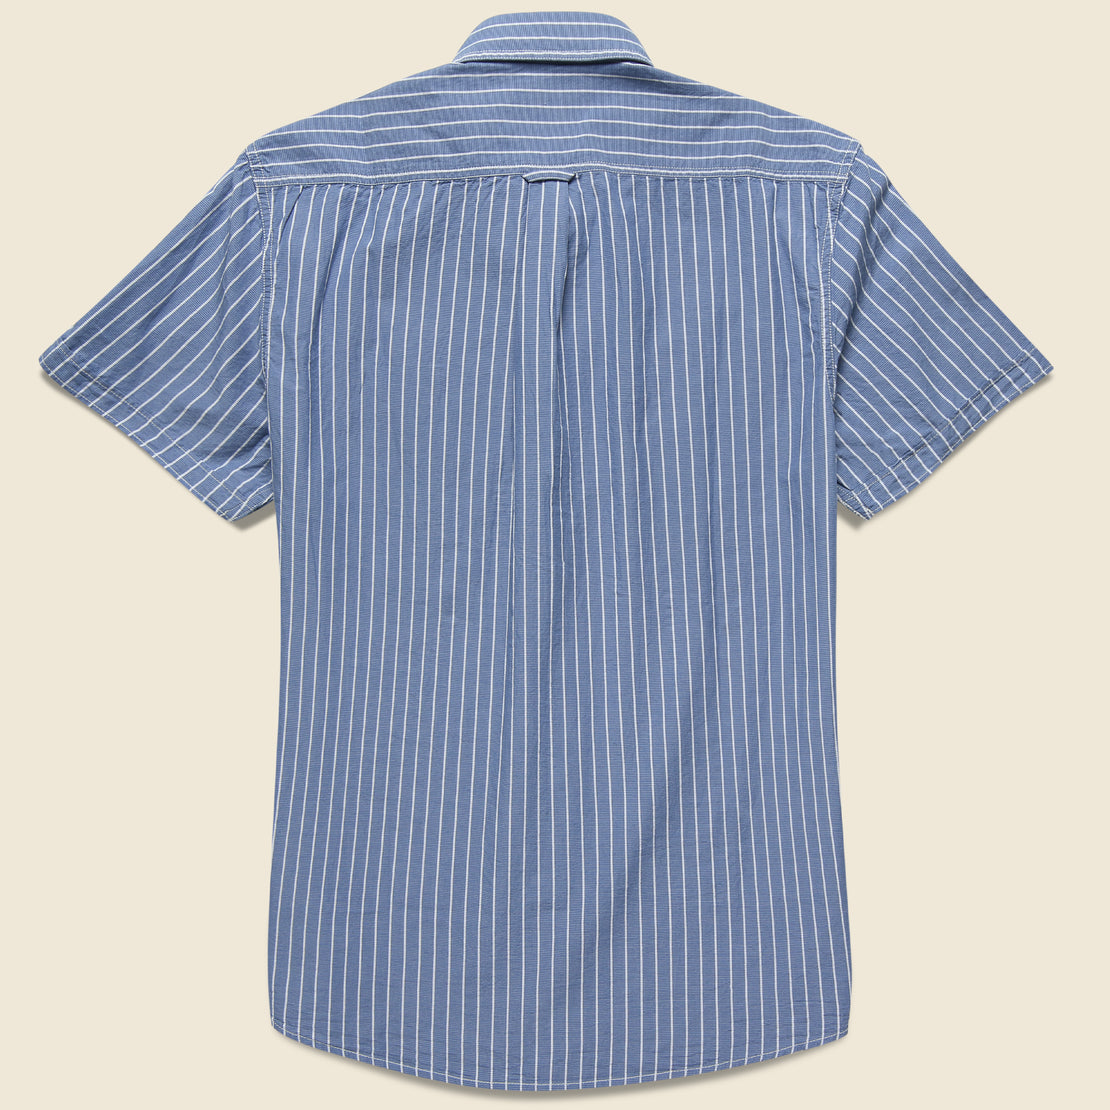 Larkin Slub Shirt - Blue Cream Stripe - Grayers - STAG Provisions - Tops - S/S Woven - Stripe